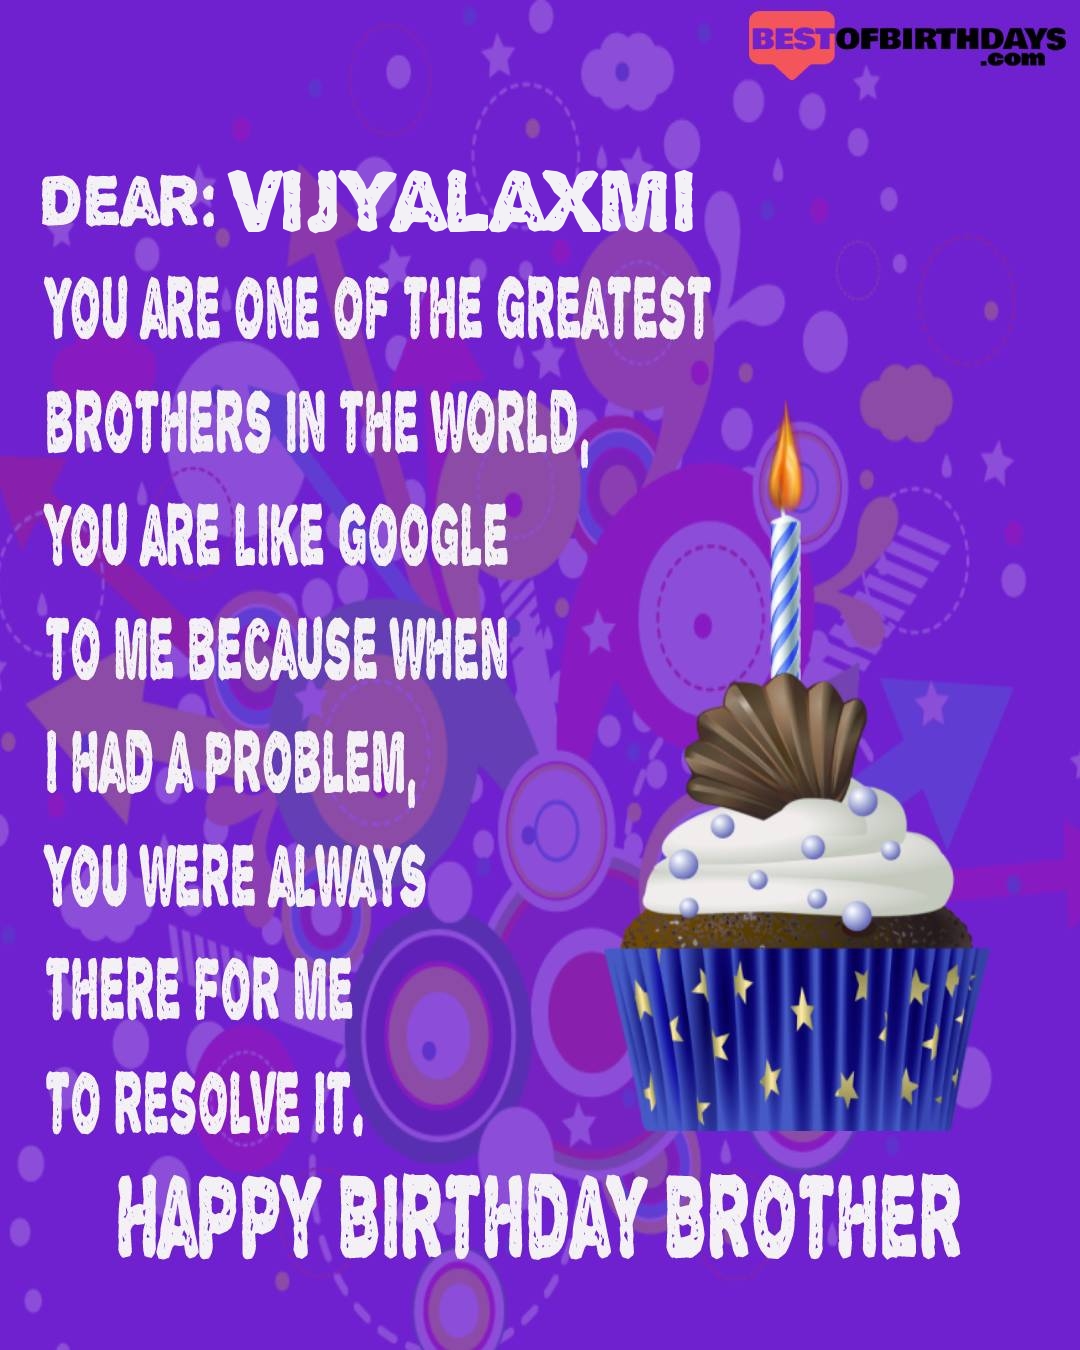 Happy birthday vijyalaxmi bhai brother bro